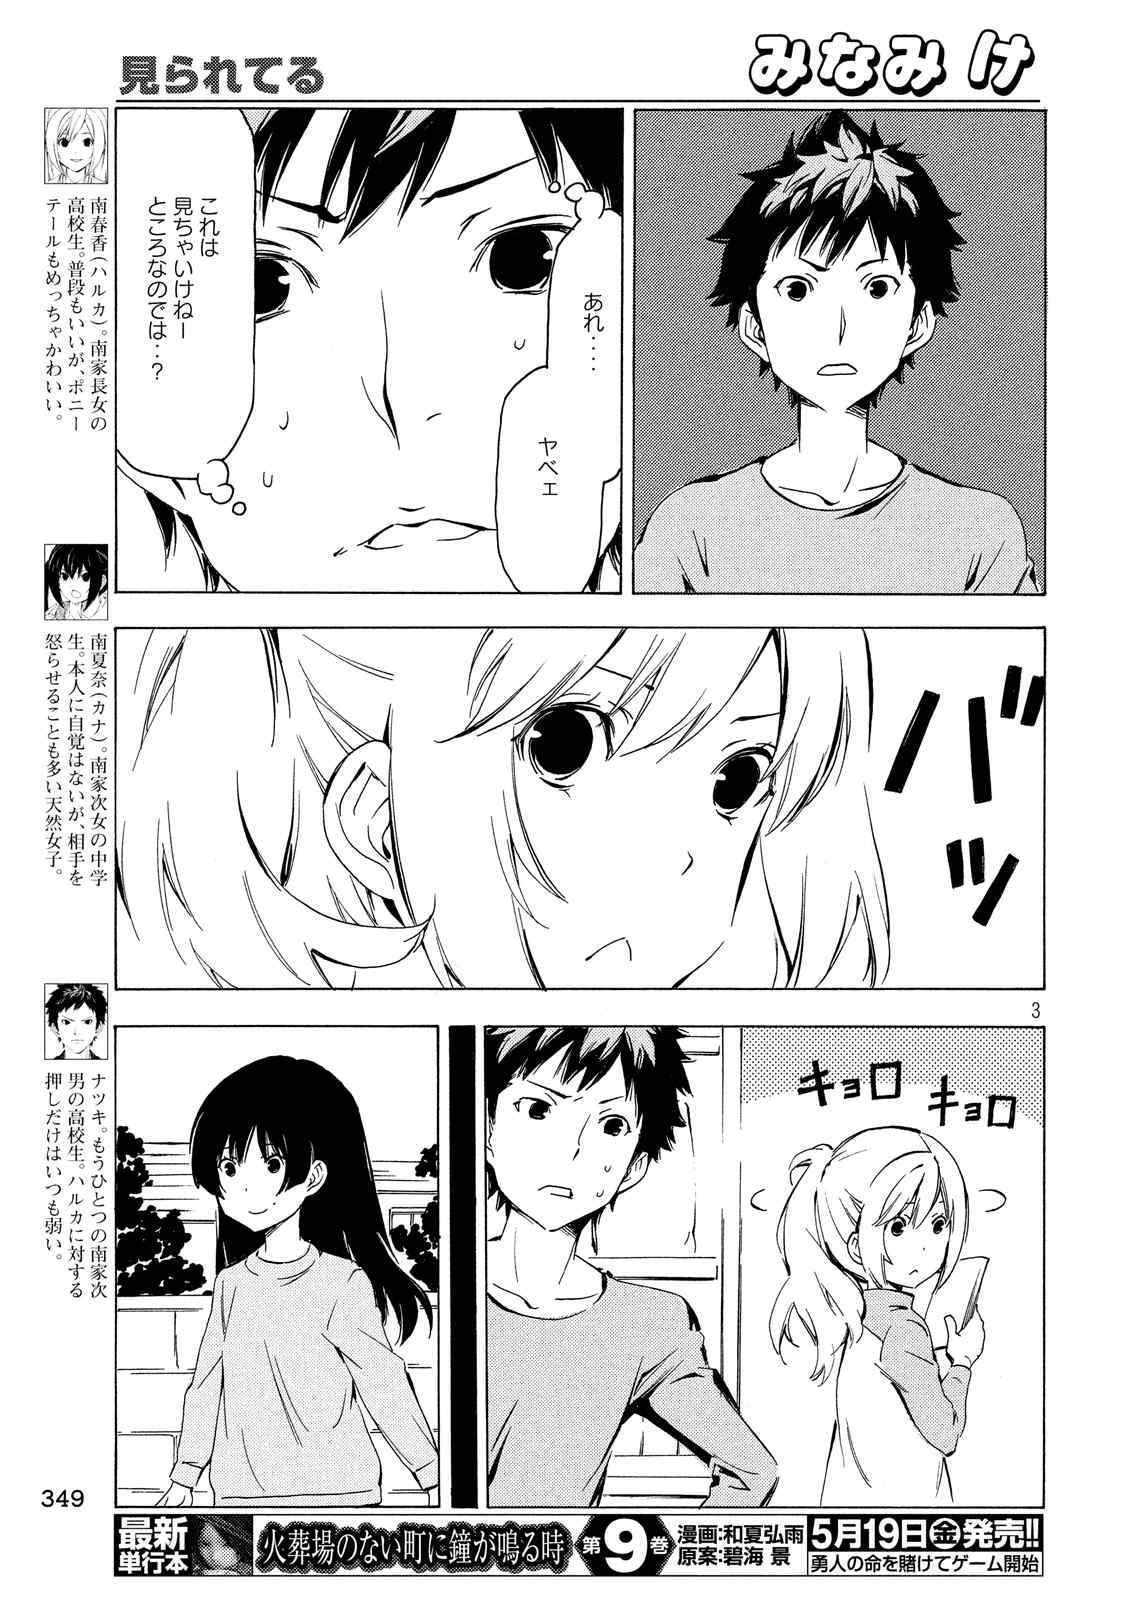 Minami-ke - Chapter 316 - Page 3